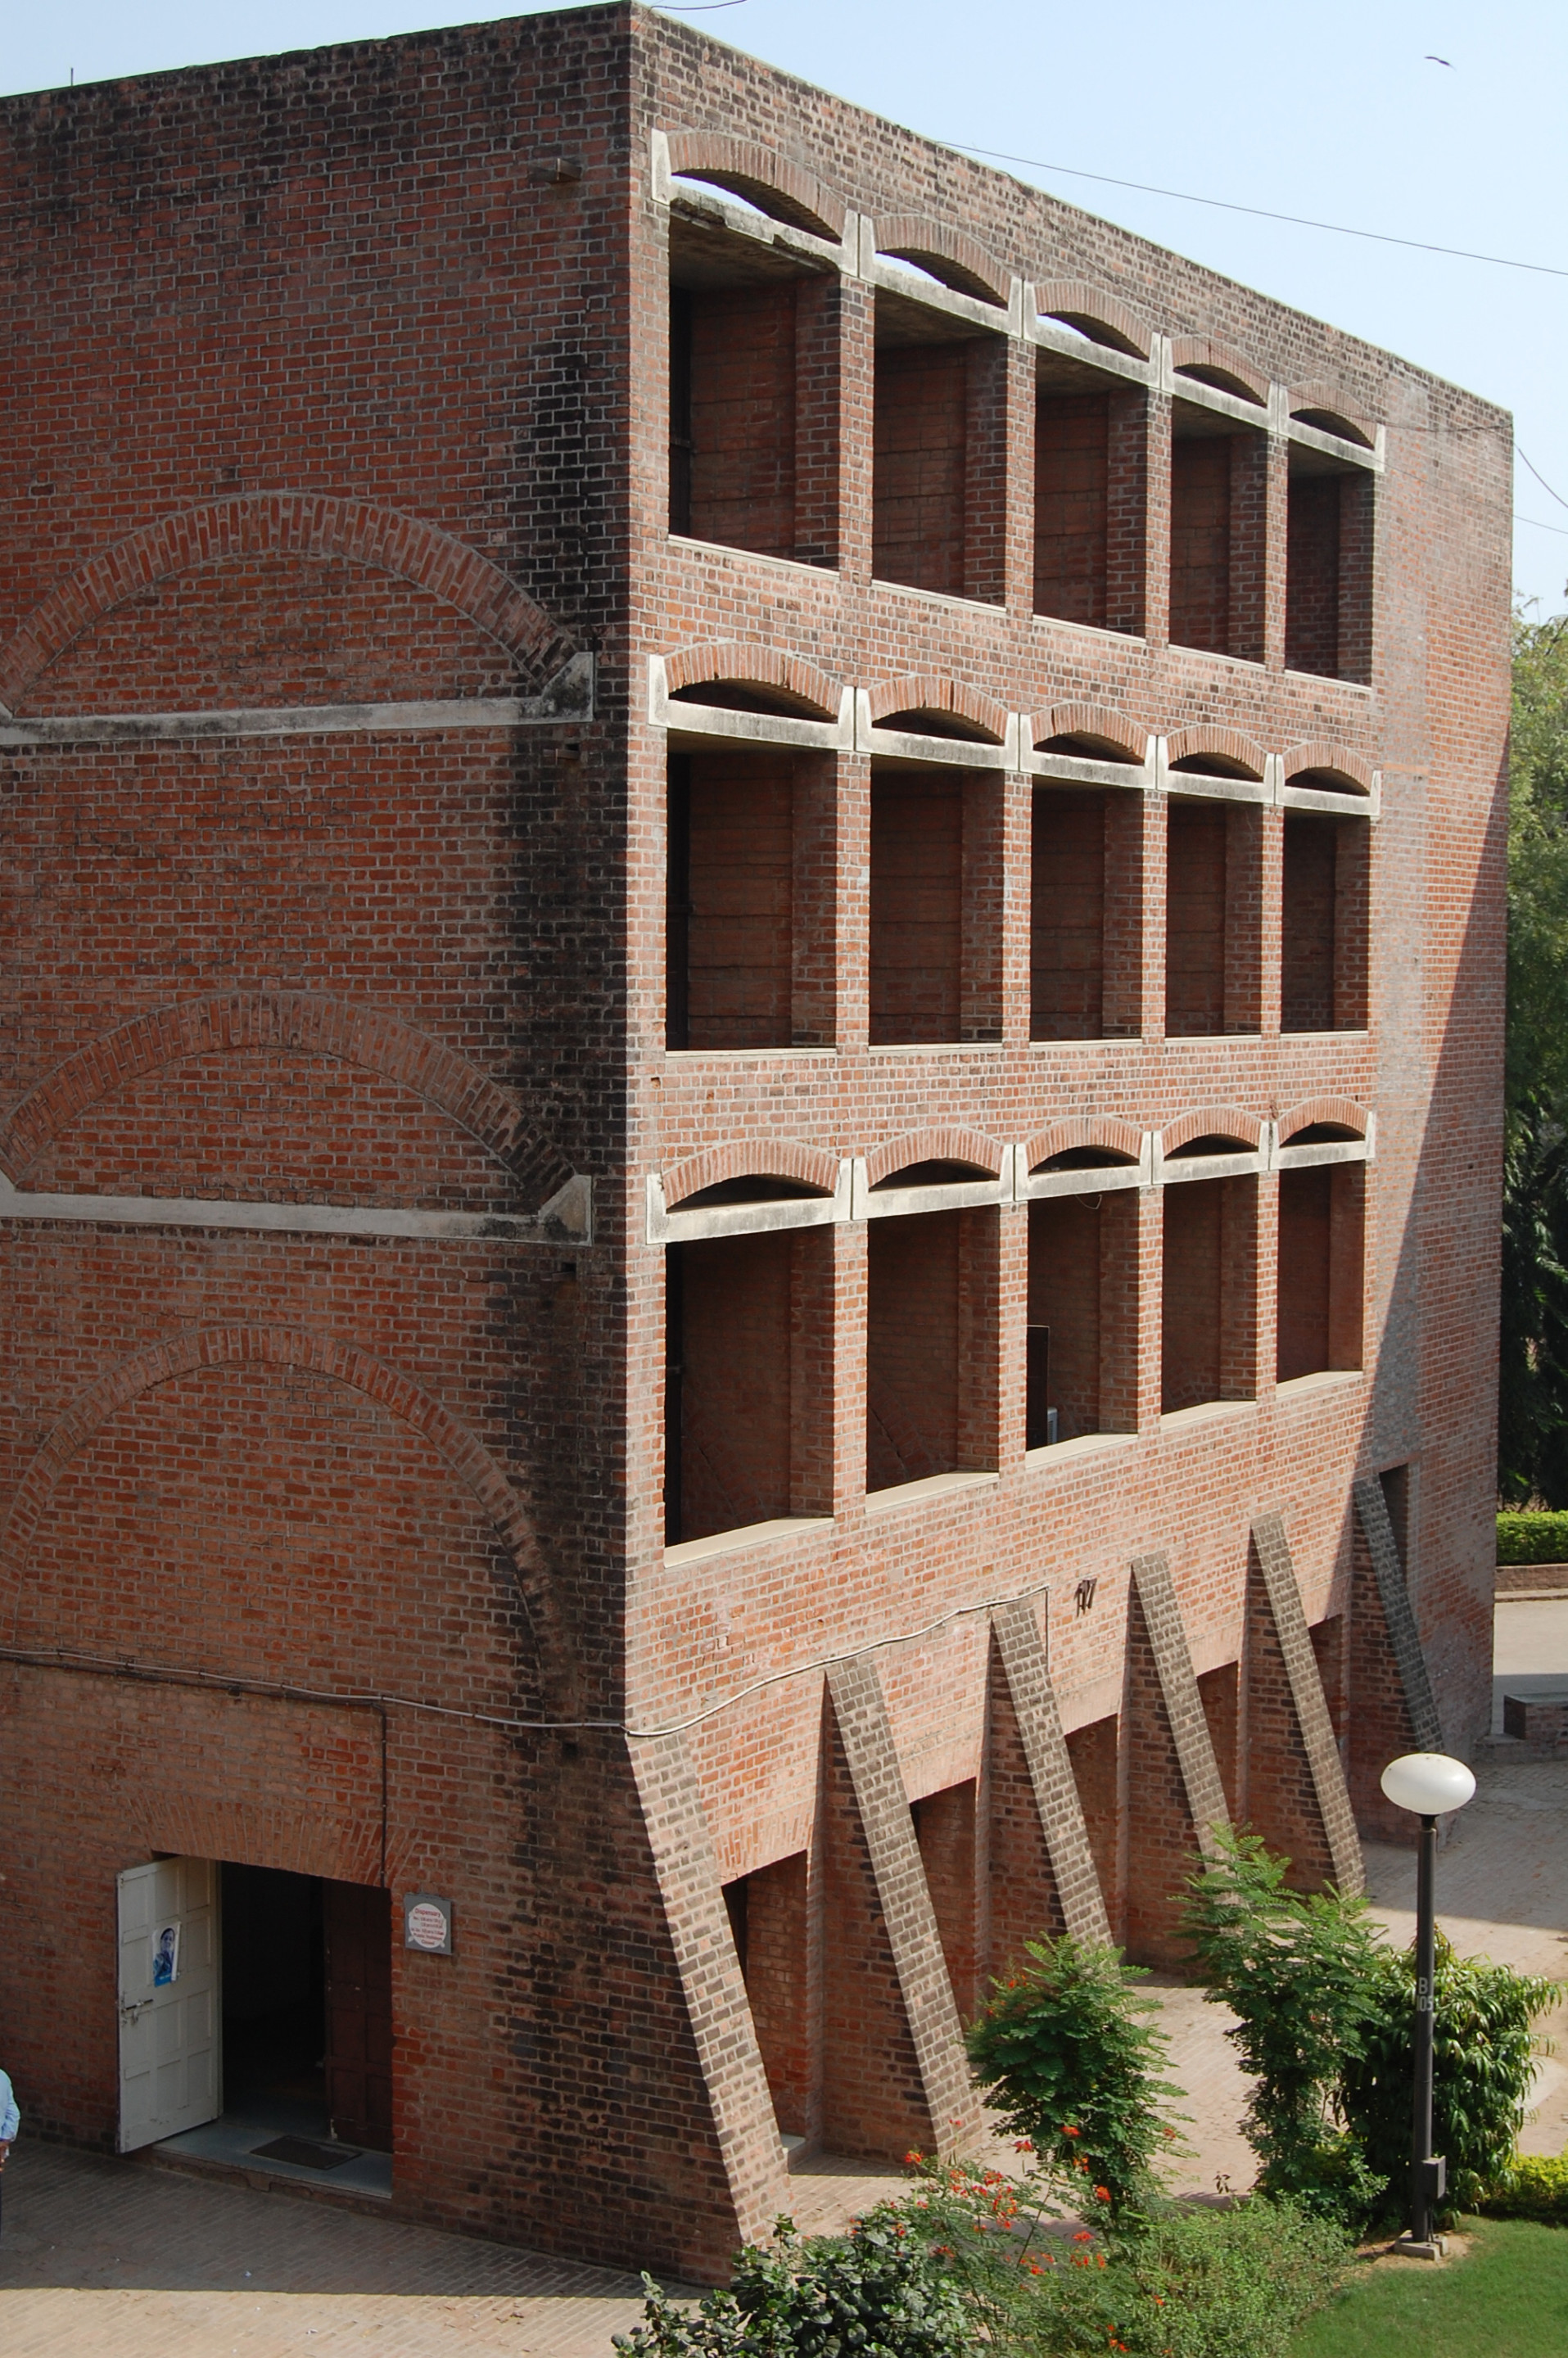 A brick dorm building in india